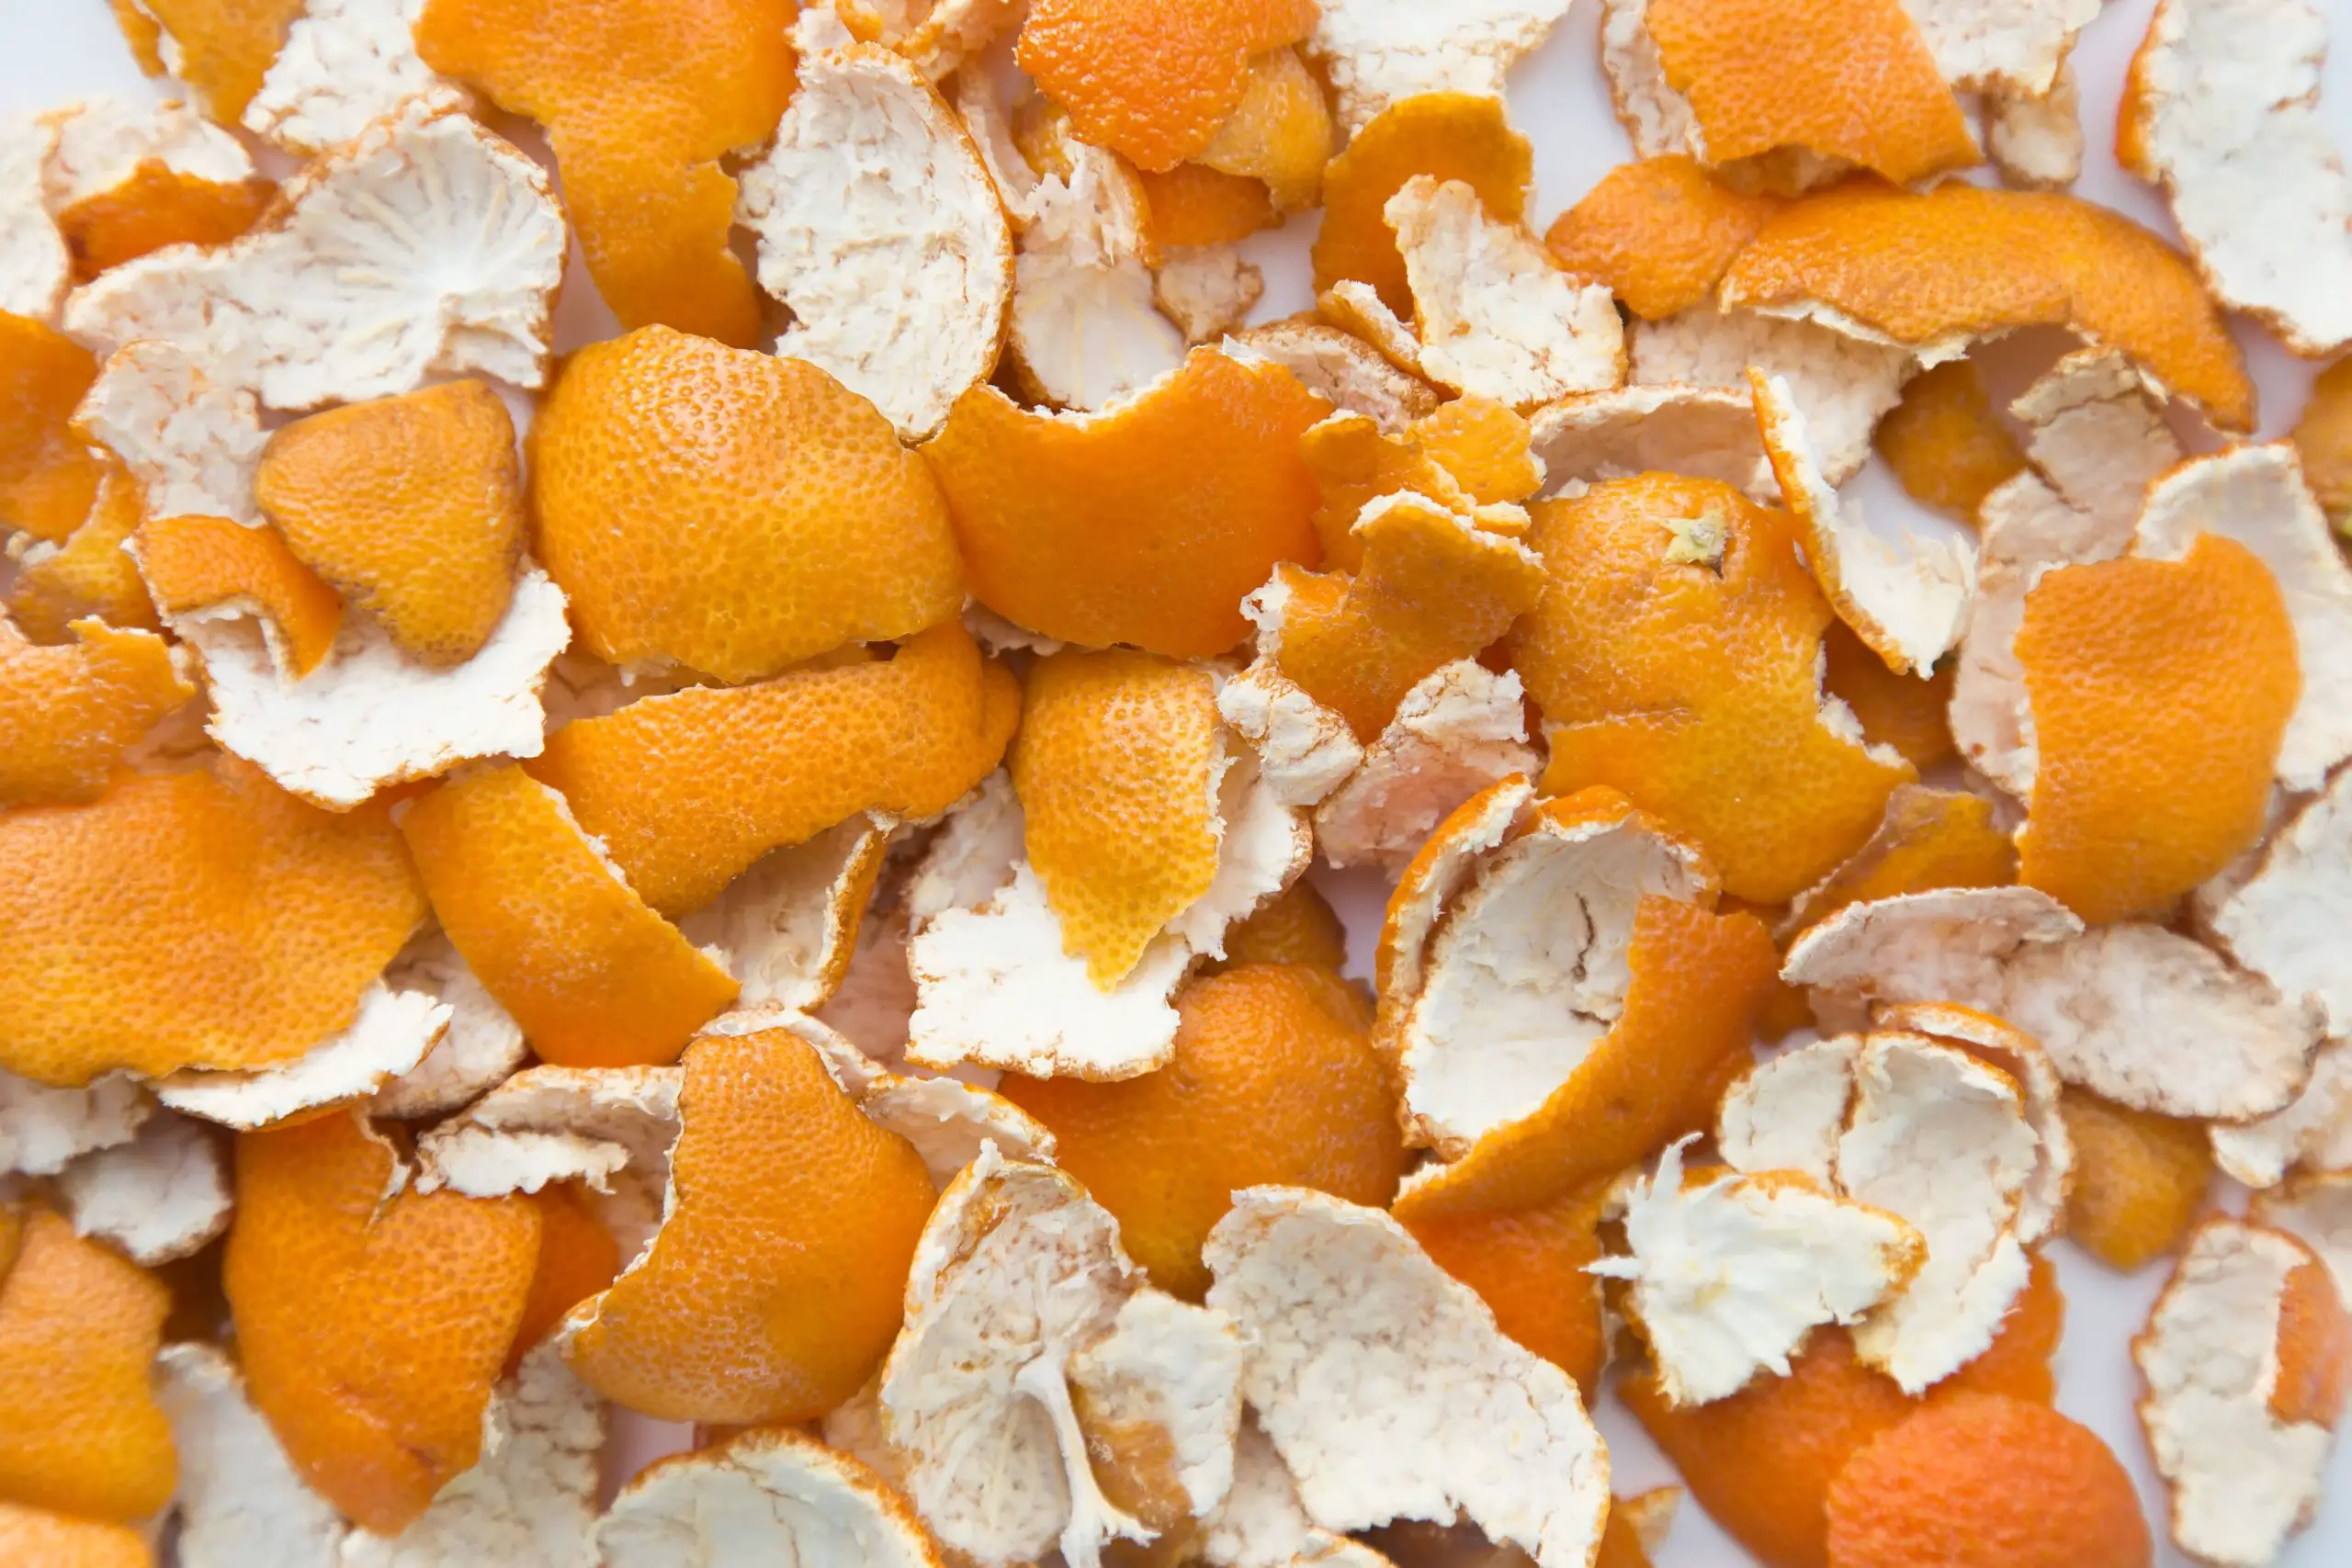 Are Orange Peels Good for Plants?